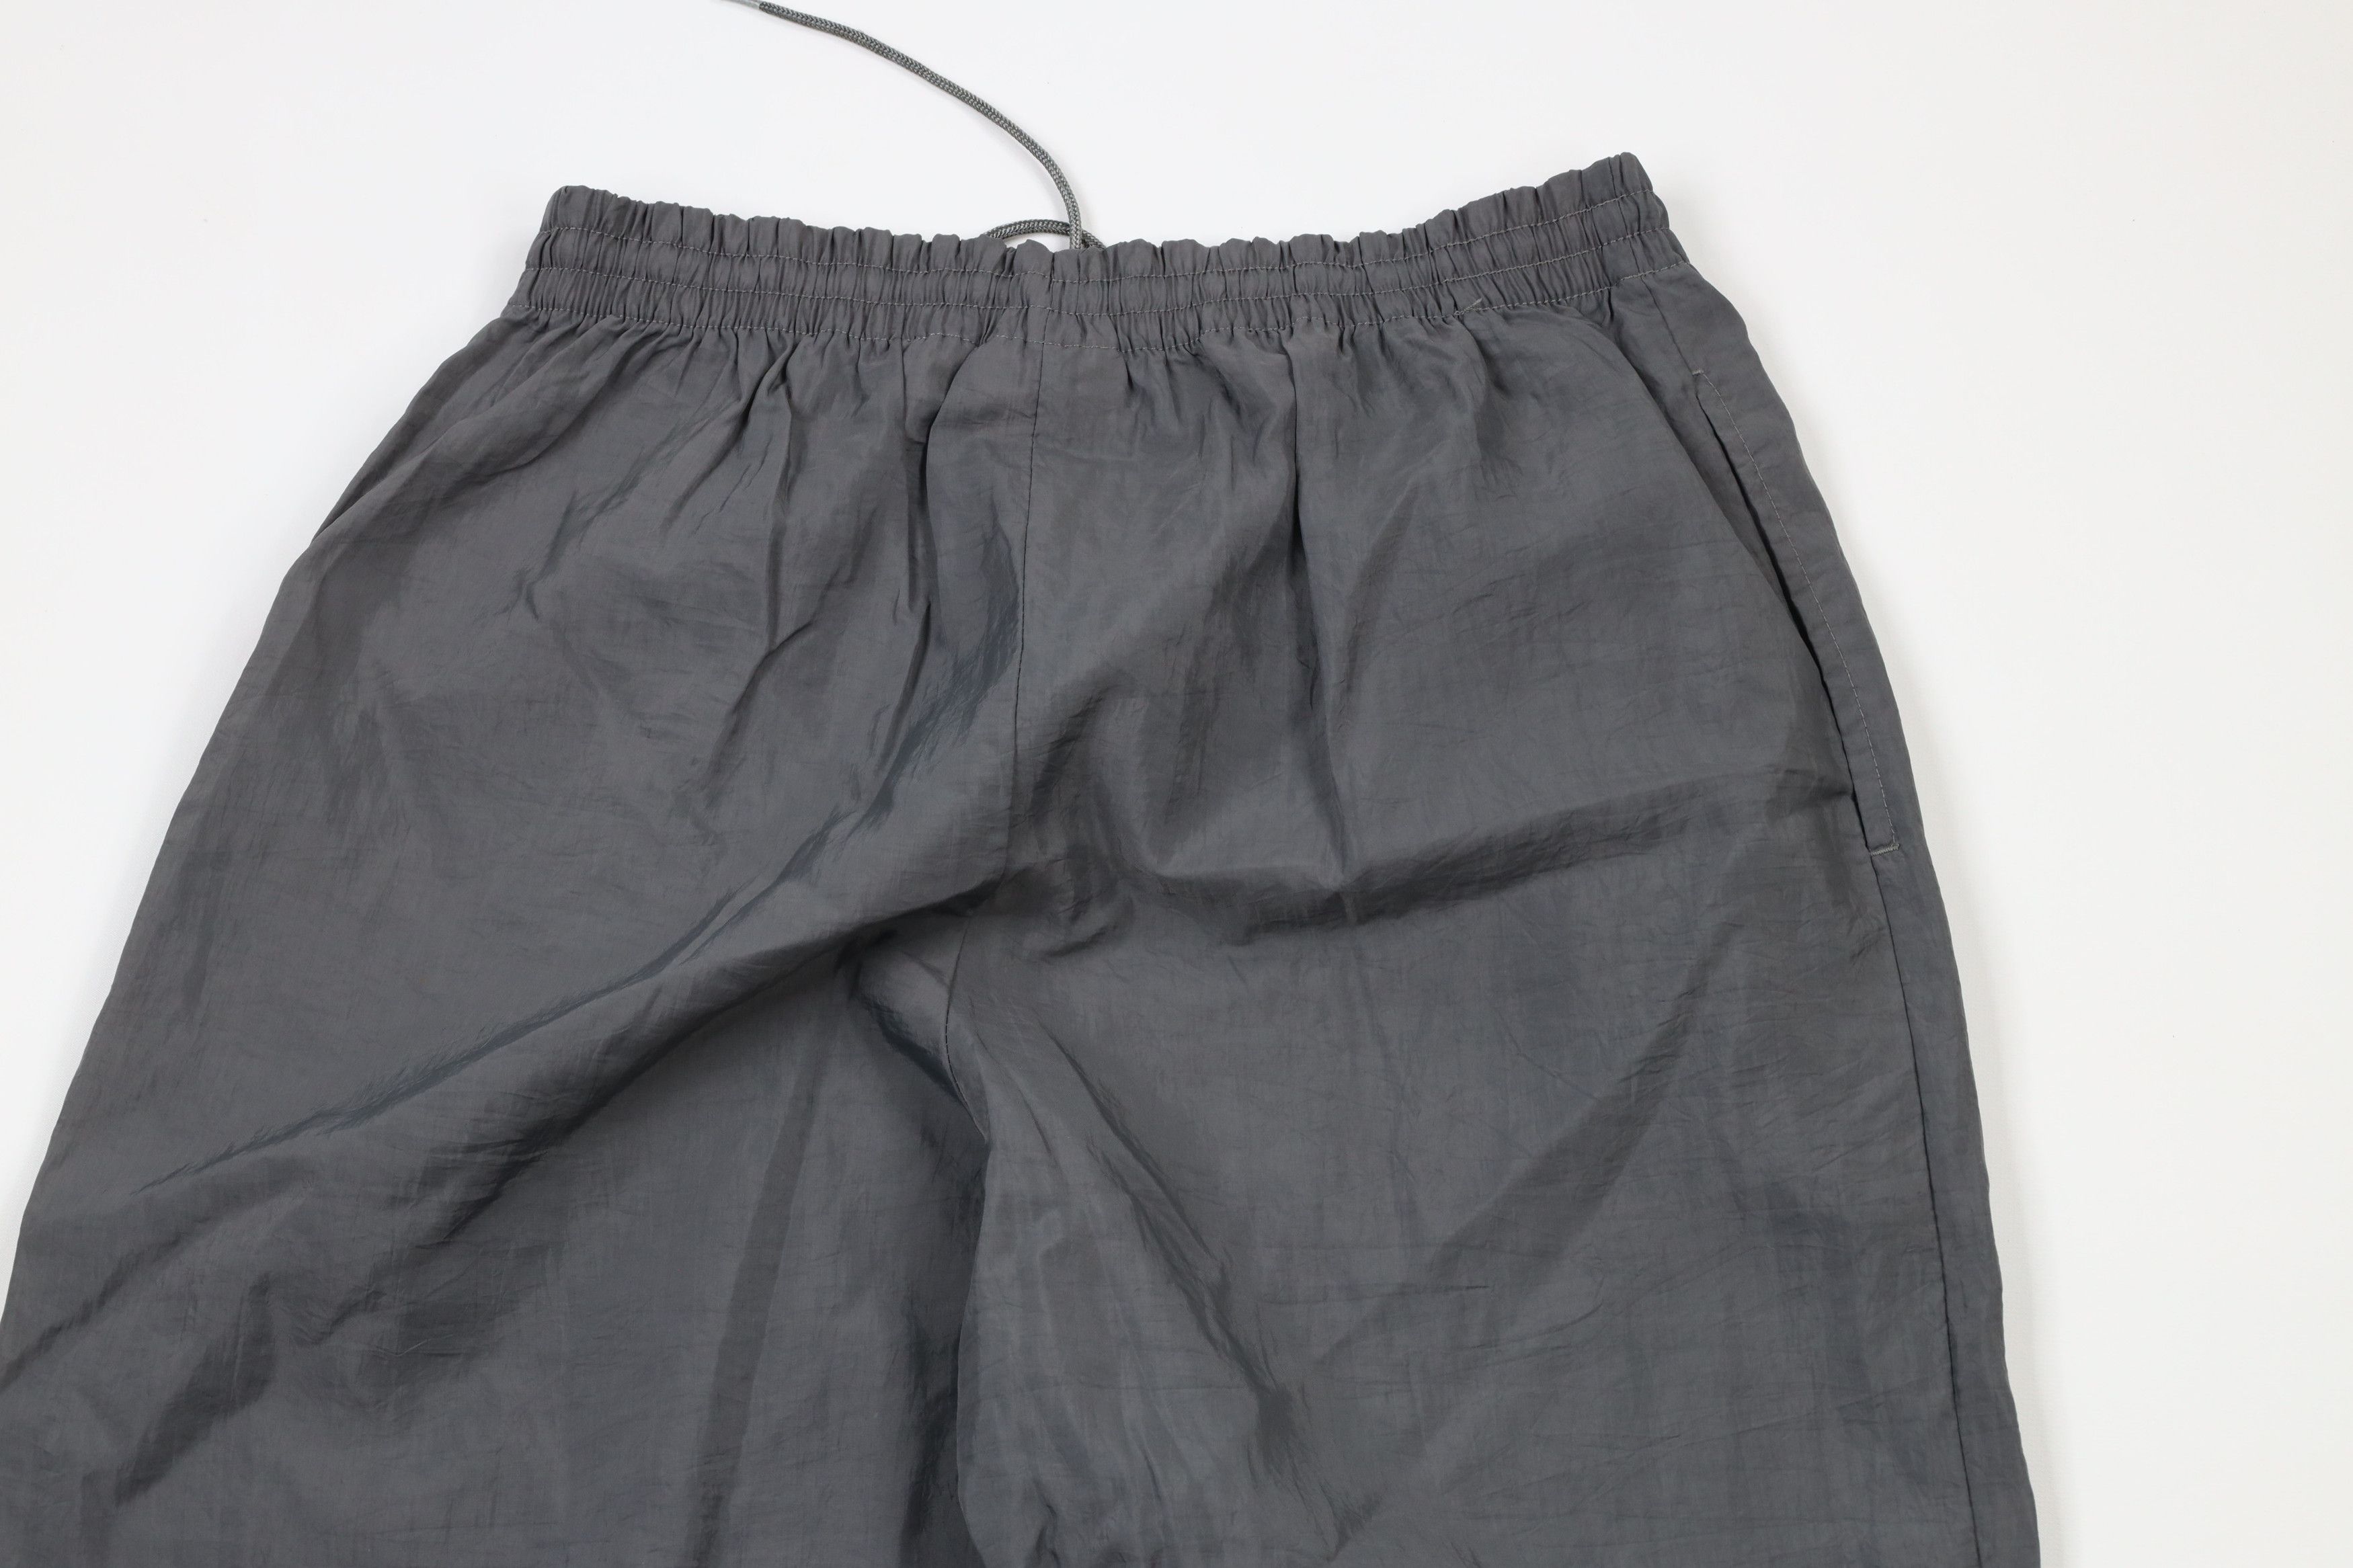 Vintage Vintage 90s Reebok Cuffed Nylon Joggers Jogger Pants Gray Size US 34 / EU 50 - 10 Thumbnail